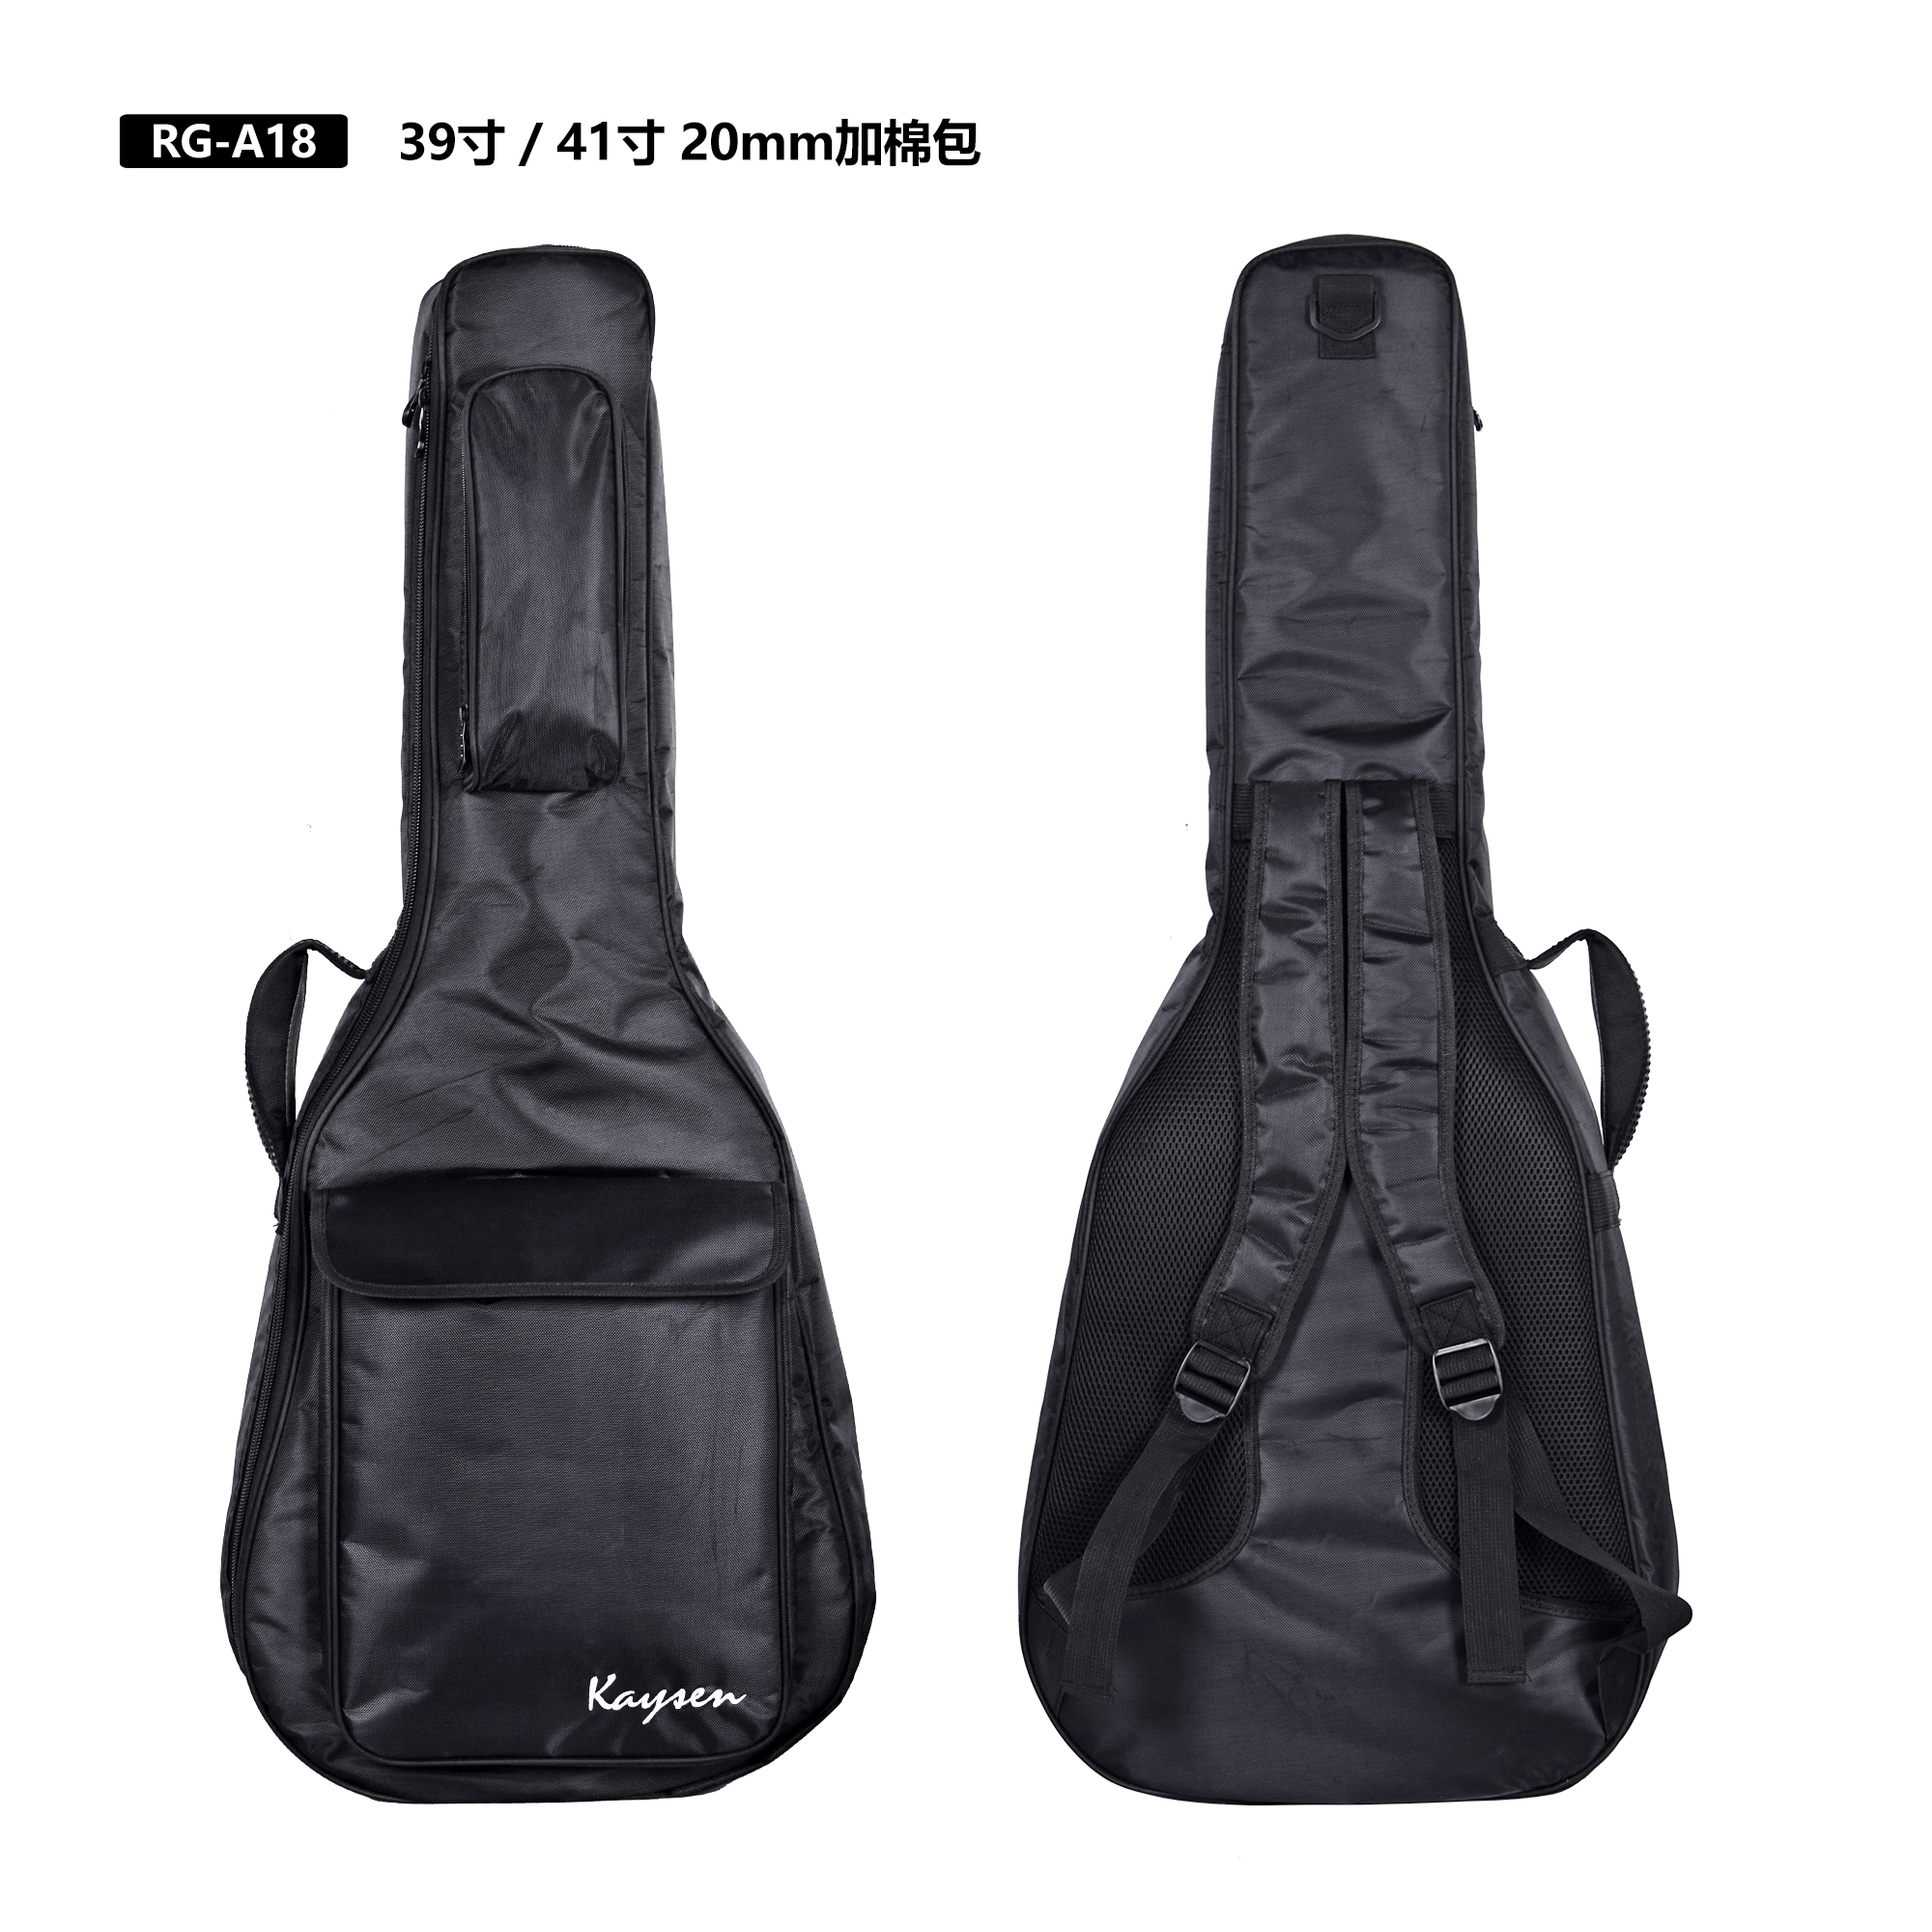 guitar padded bag תיק מרופד לגיטרה אקוסטית - קלאסית 20MM